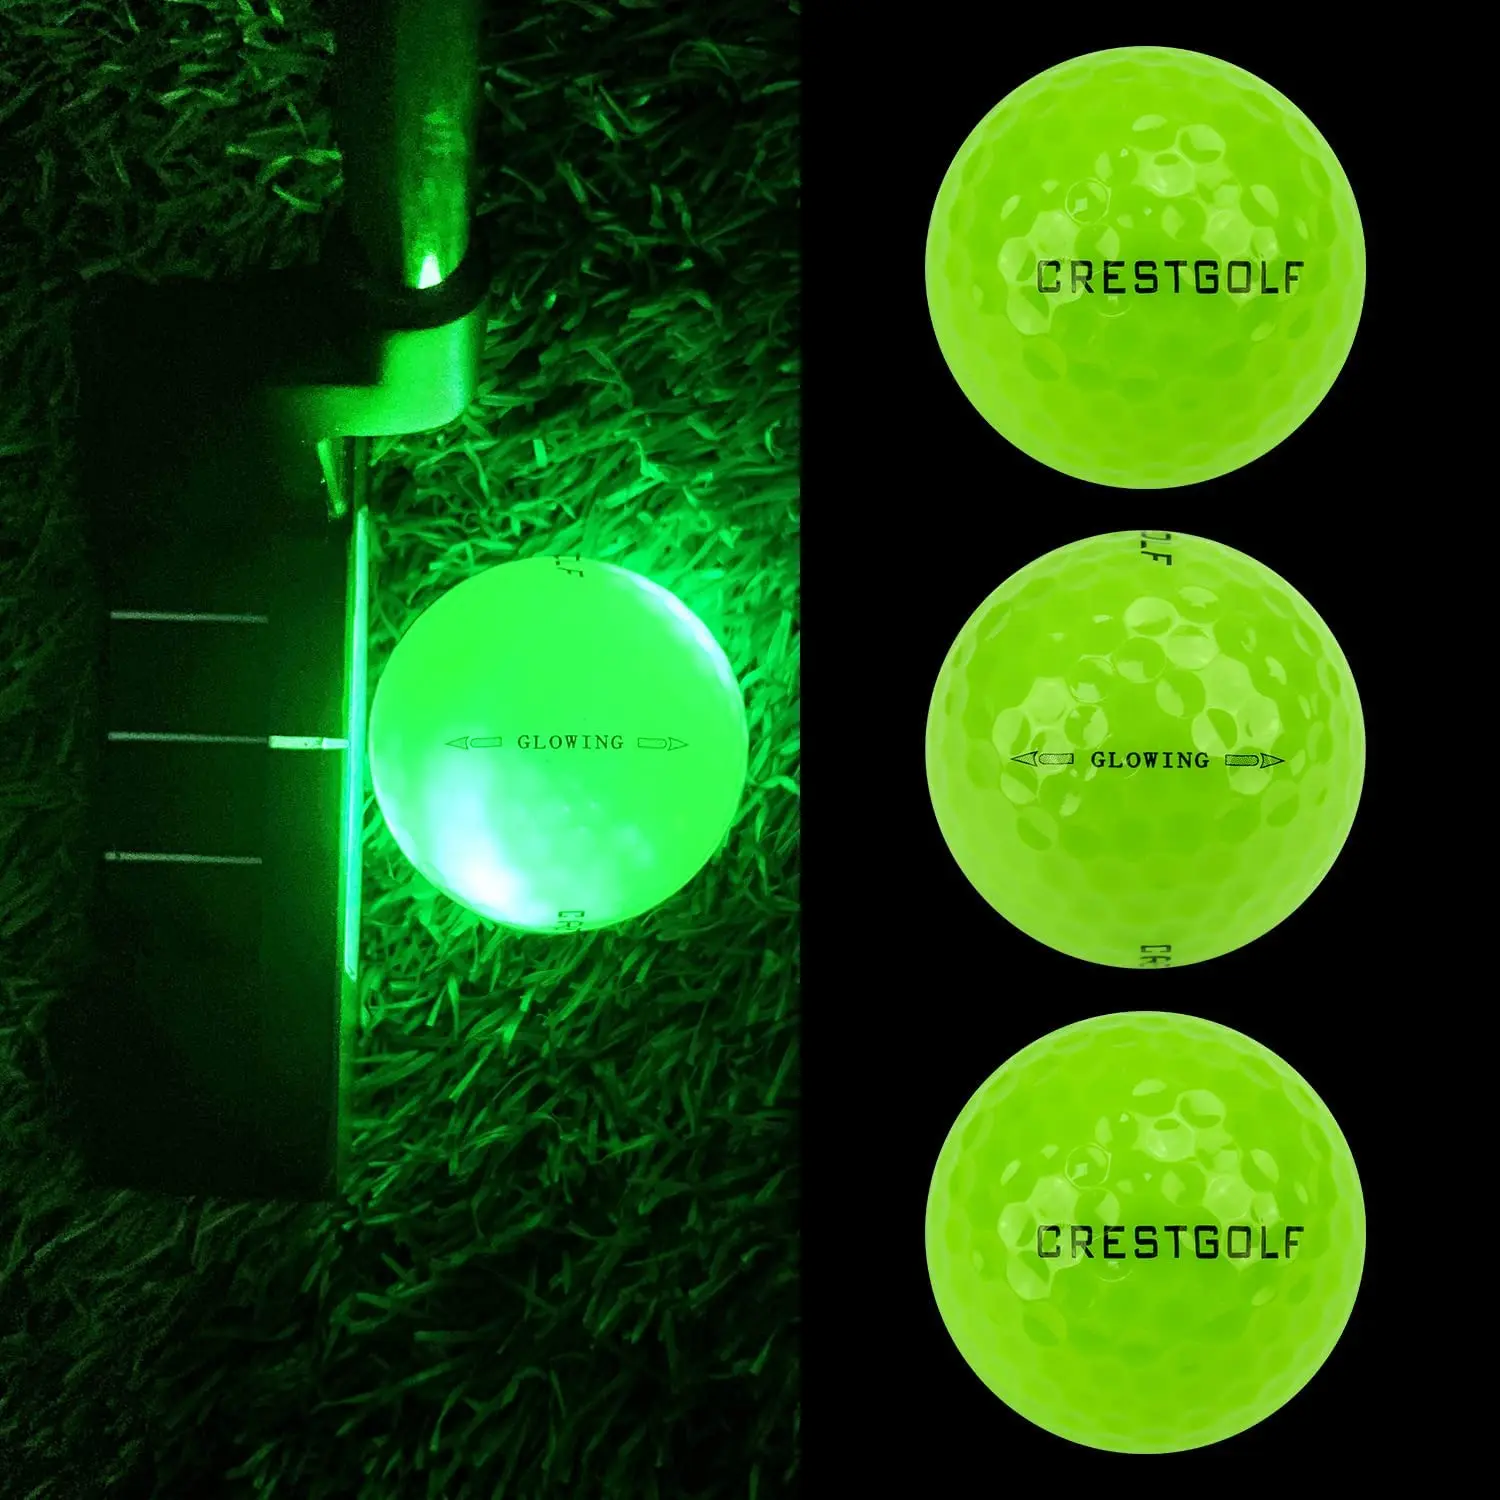 CRESTGOLF 야간 훈련용 LED 골프 공, 골프 연습 공용 고경도 소재, 4 개의 조명, 팩당 4 개 